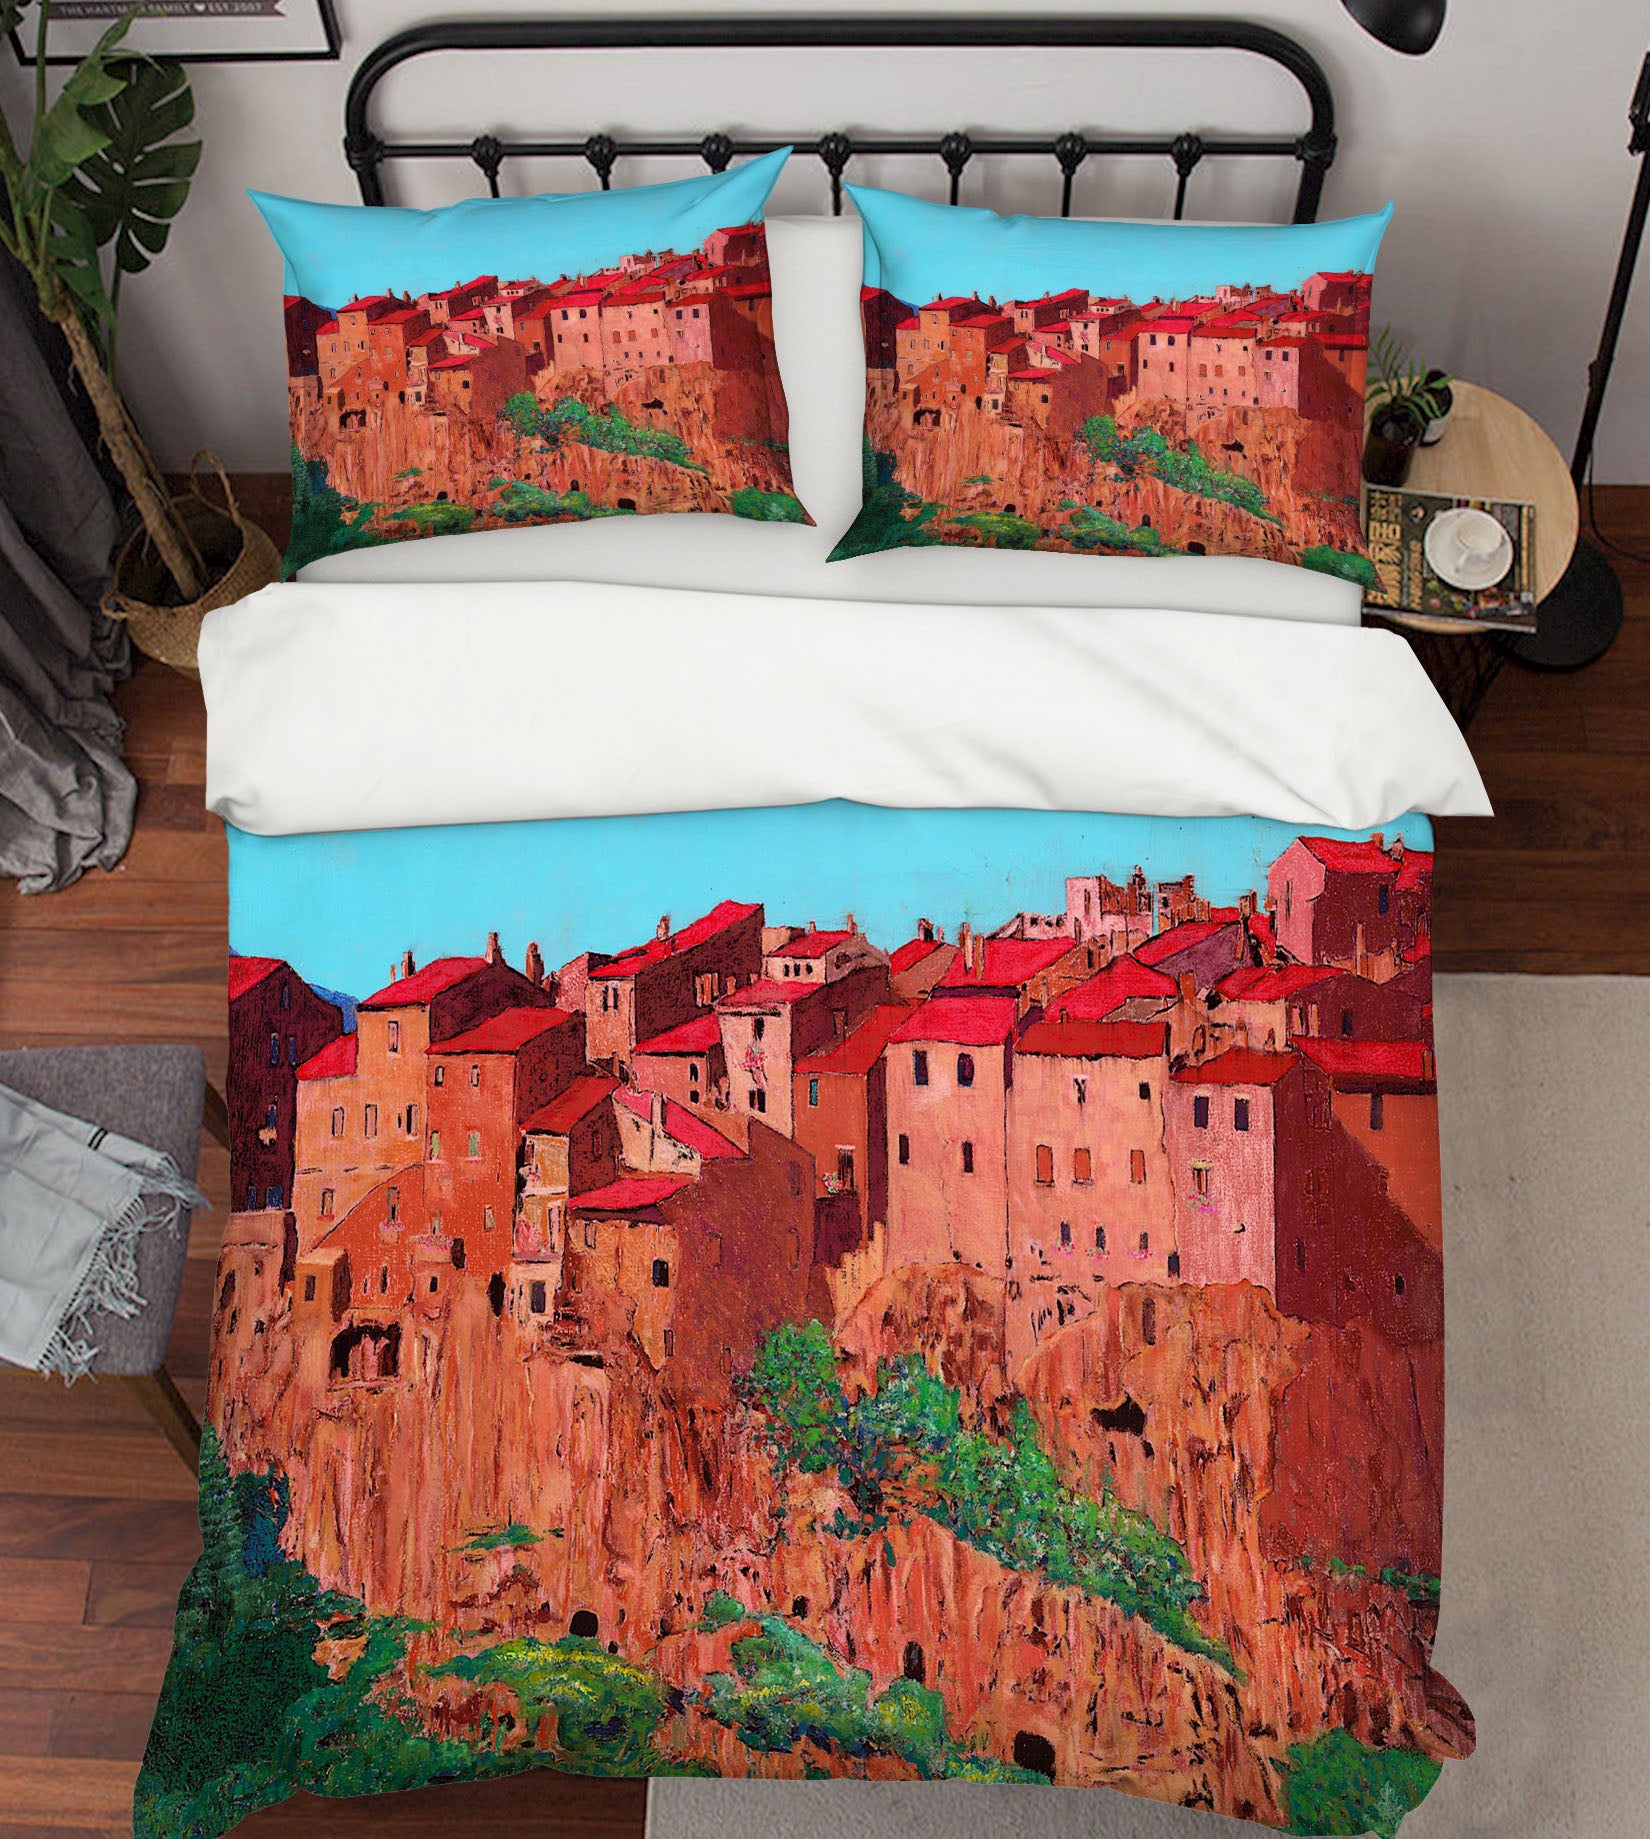 3D Pitigliano Village 1171 Allan P. Friedlander Bedding Bed Pillowcases Quilt